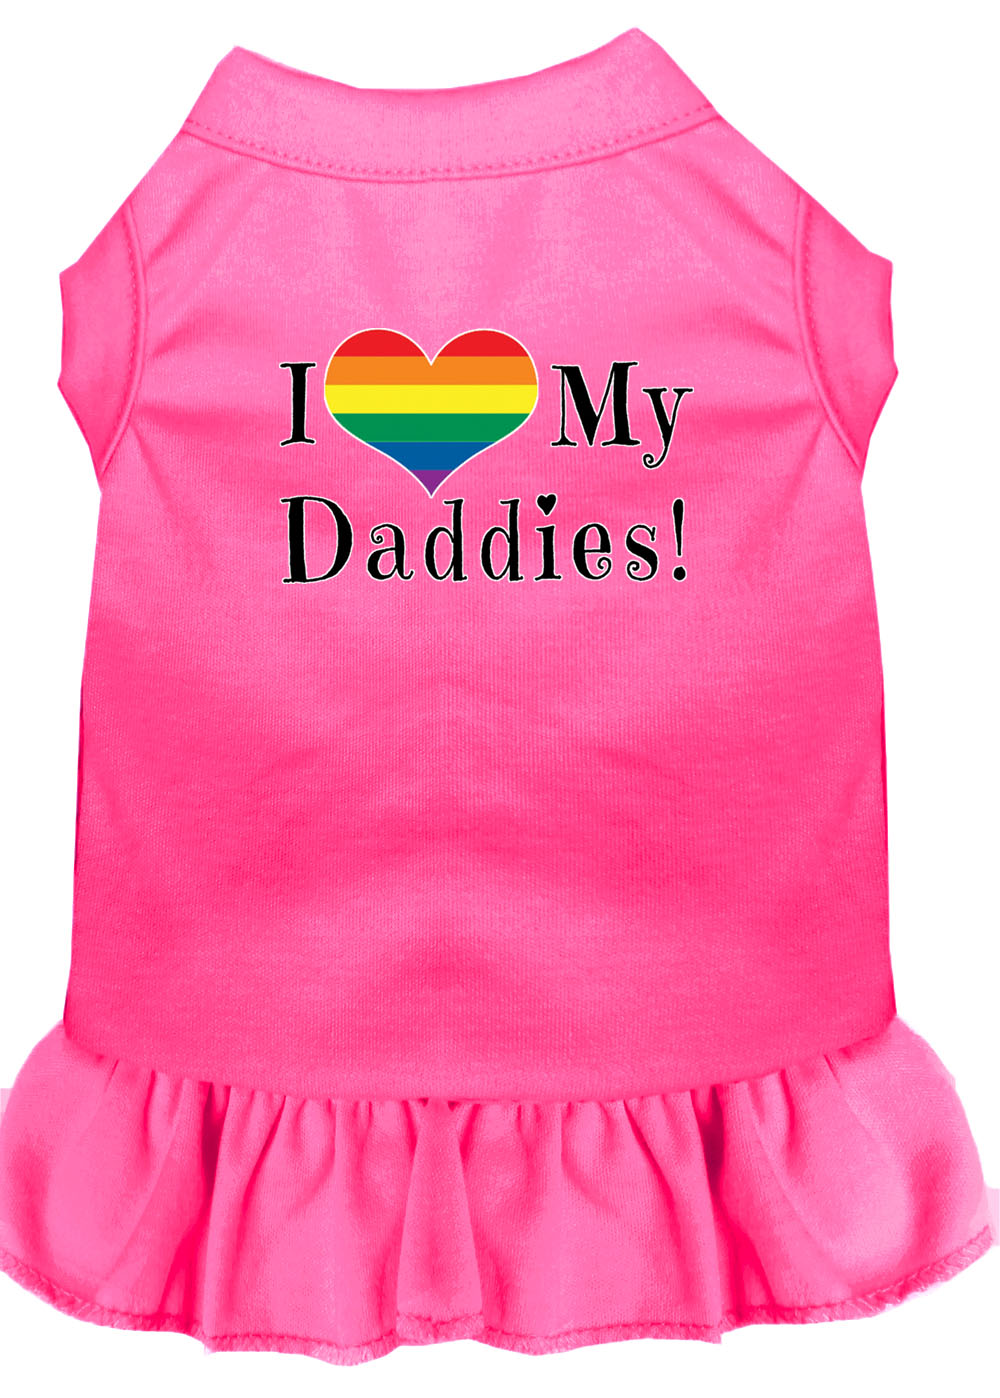 I Heart my Daddies Screen Print Dog Dress Bright Pink Med